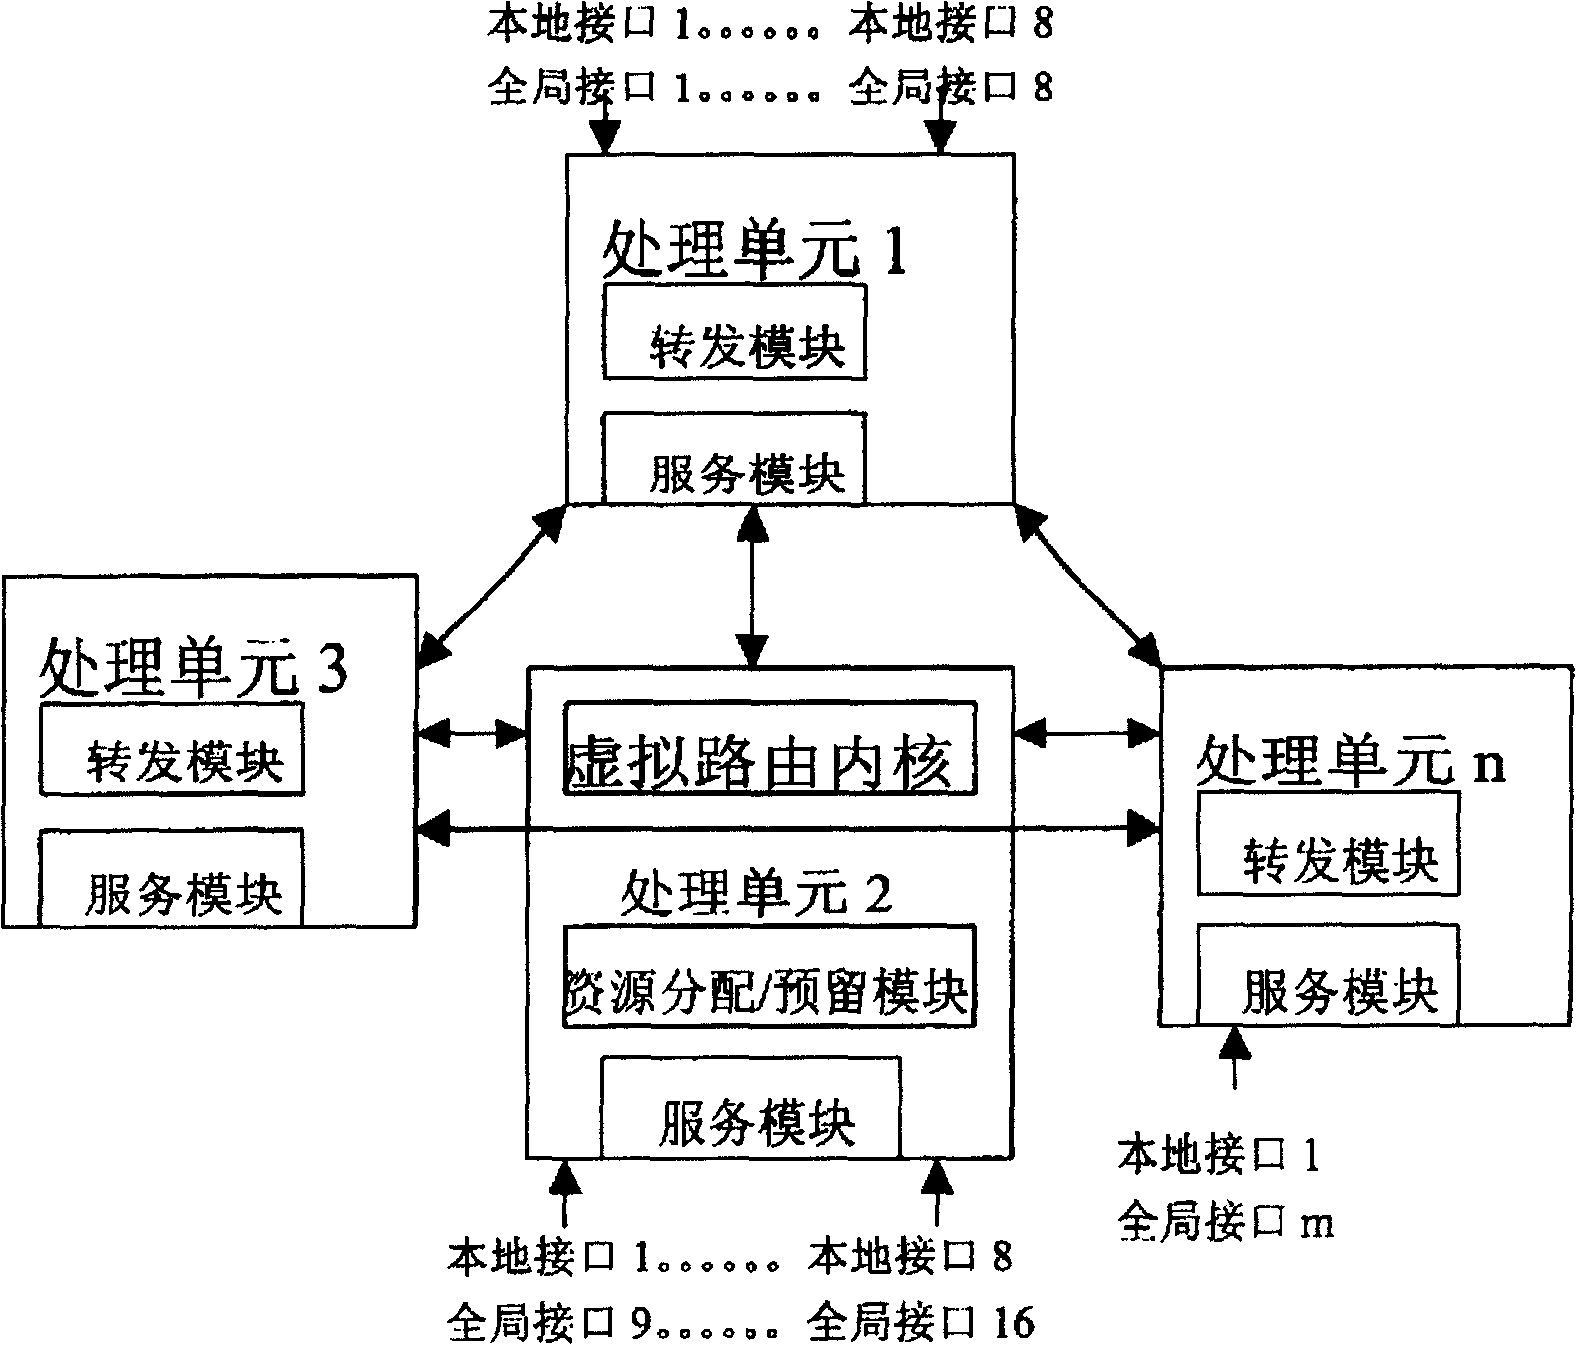 Multi-processing unit route system